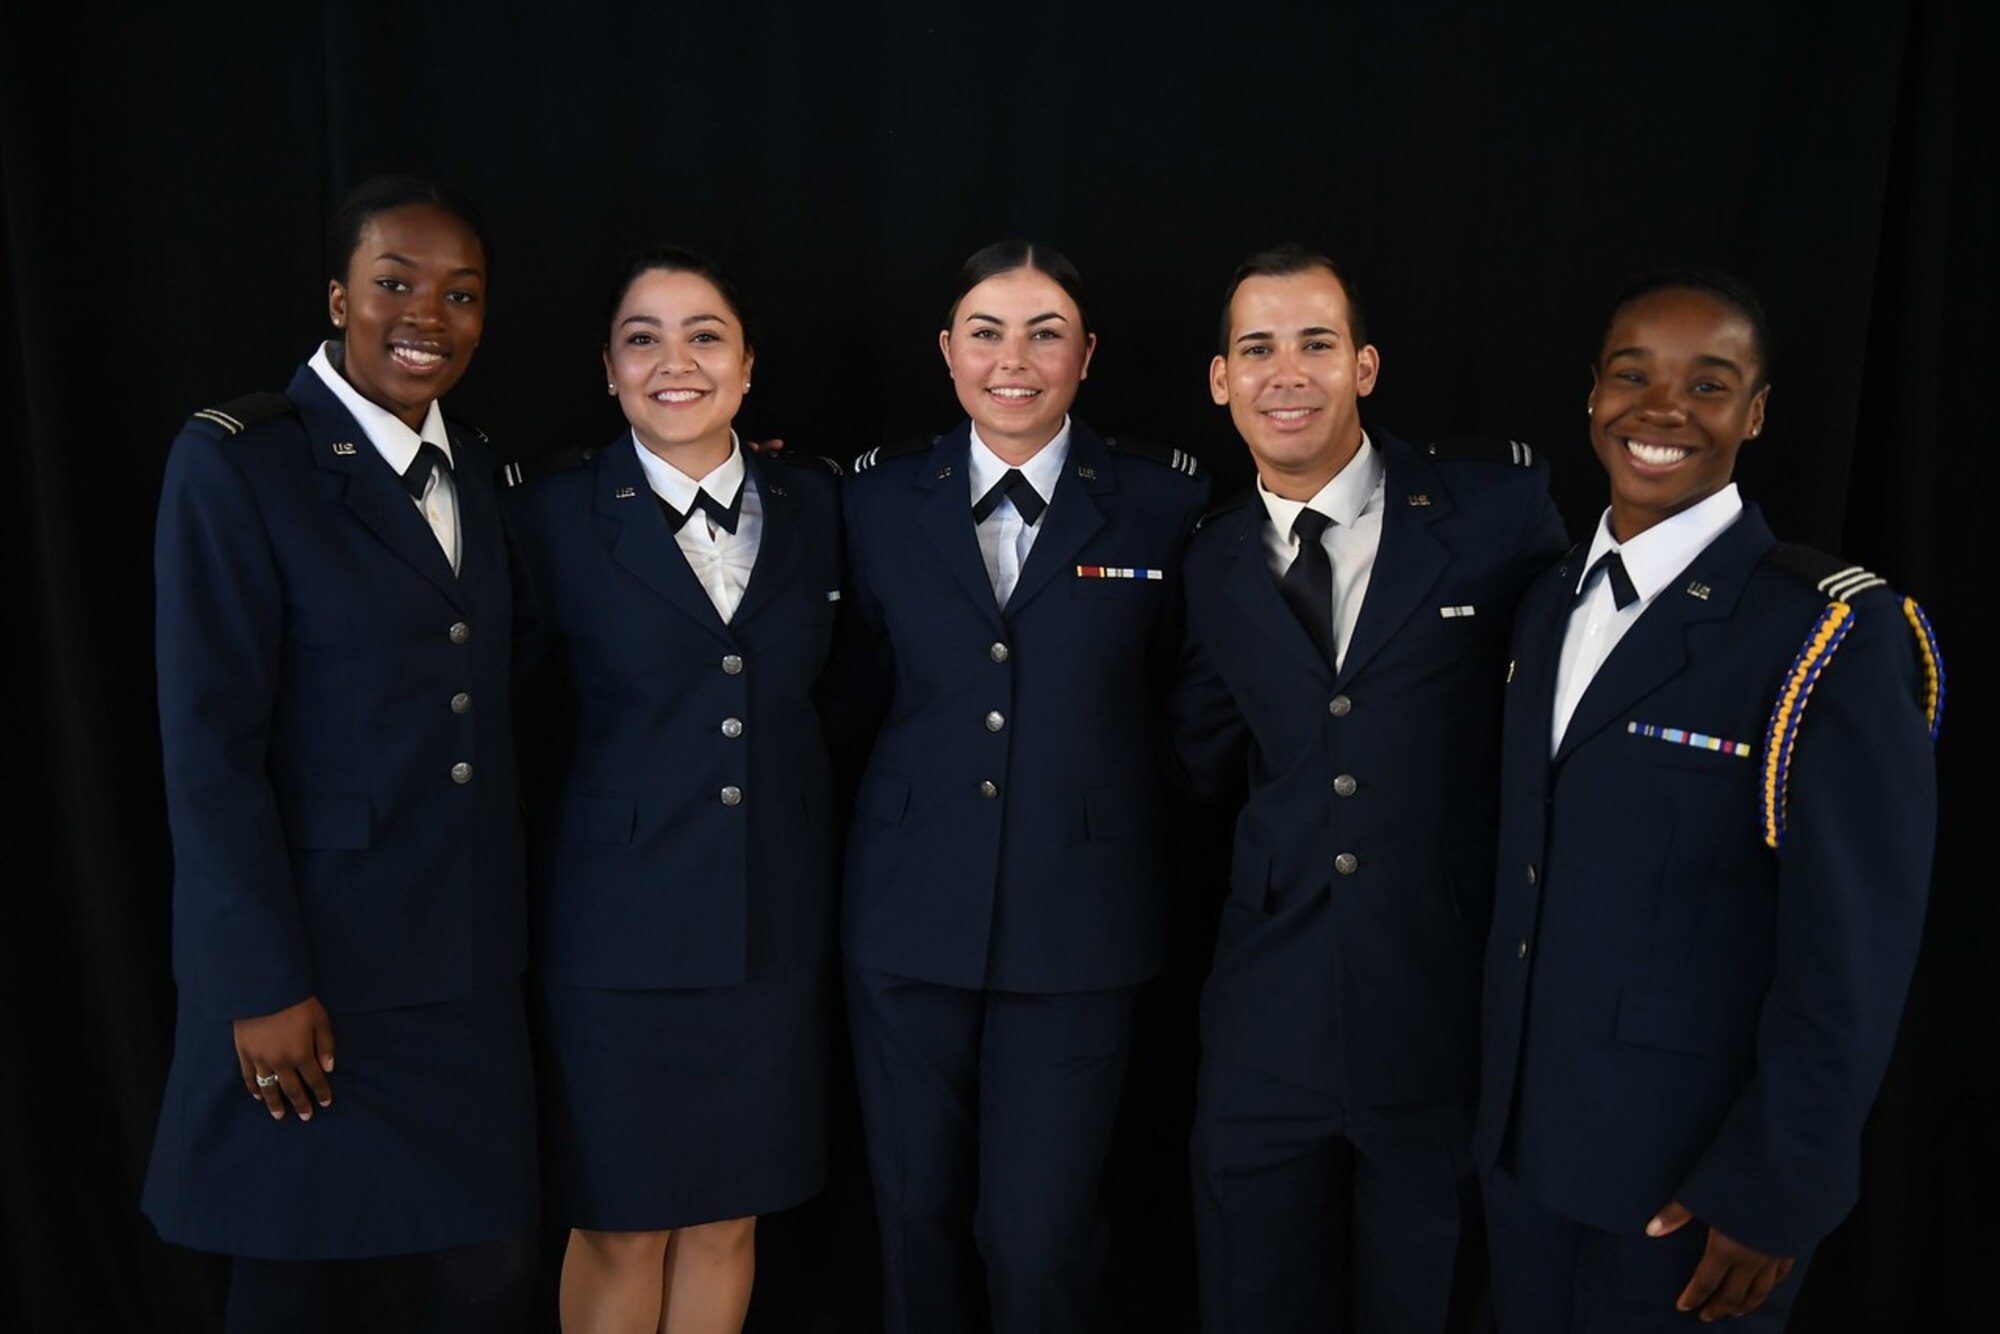 U.S. Air Force 2nd Lt. Amirah Latiff, 2nd Lt. Gabrielle Payne, 2nd Lt. Kennedy DiBerardino, 2nd Lt. Julian Lawson, and 2nd Lt. Destini Hamilton, pose for a photo in their ROTC attire.